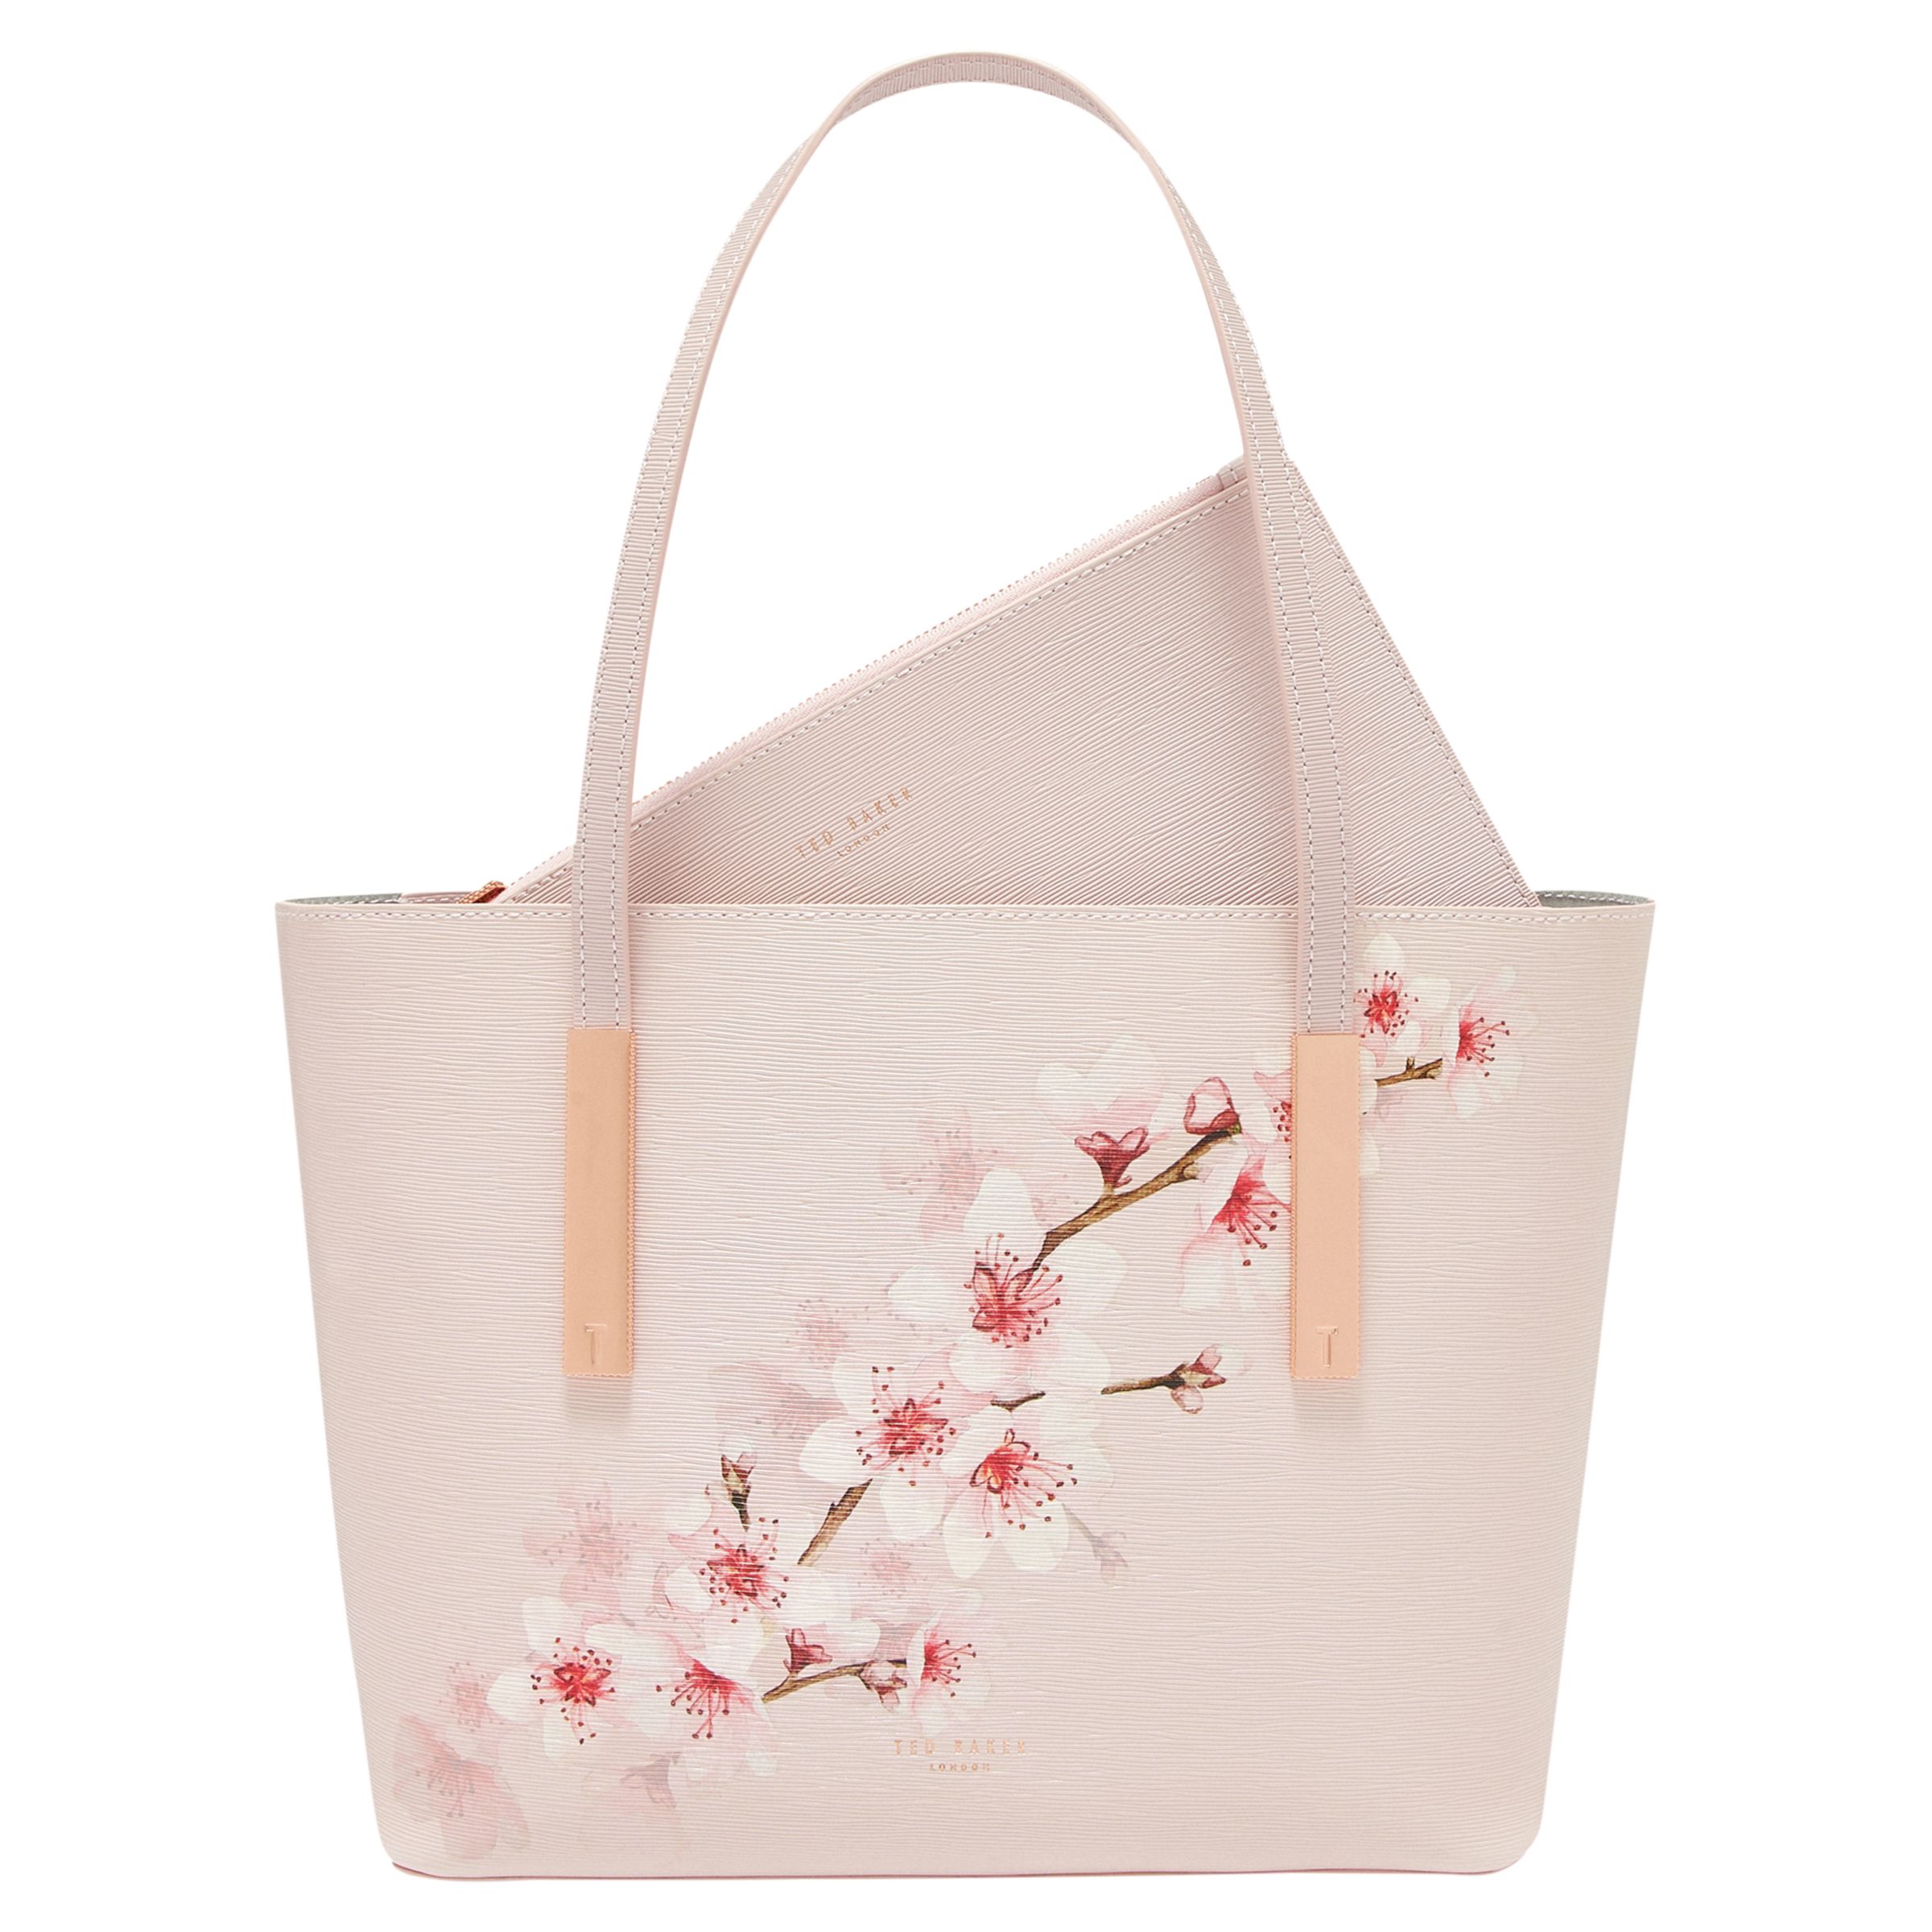 Ted Baker Goldiie Soft Blossom Leather Shopper Bag, Light Pink at John Lewis